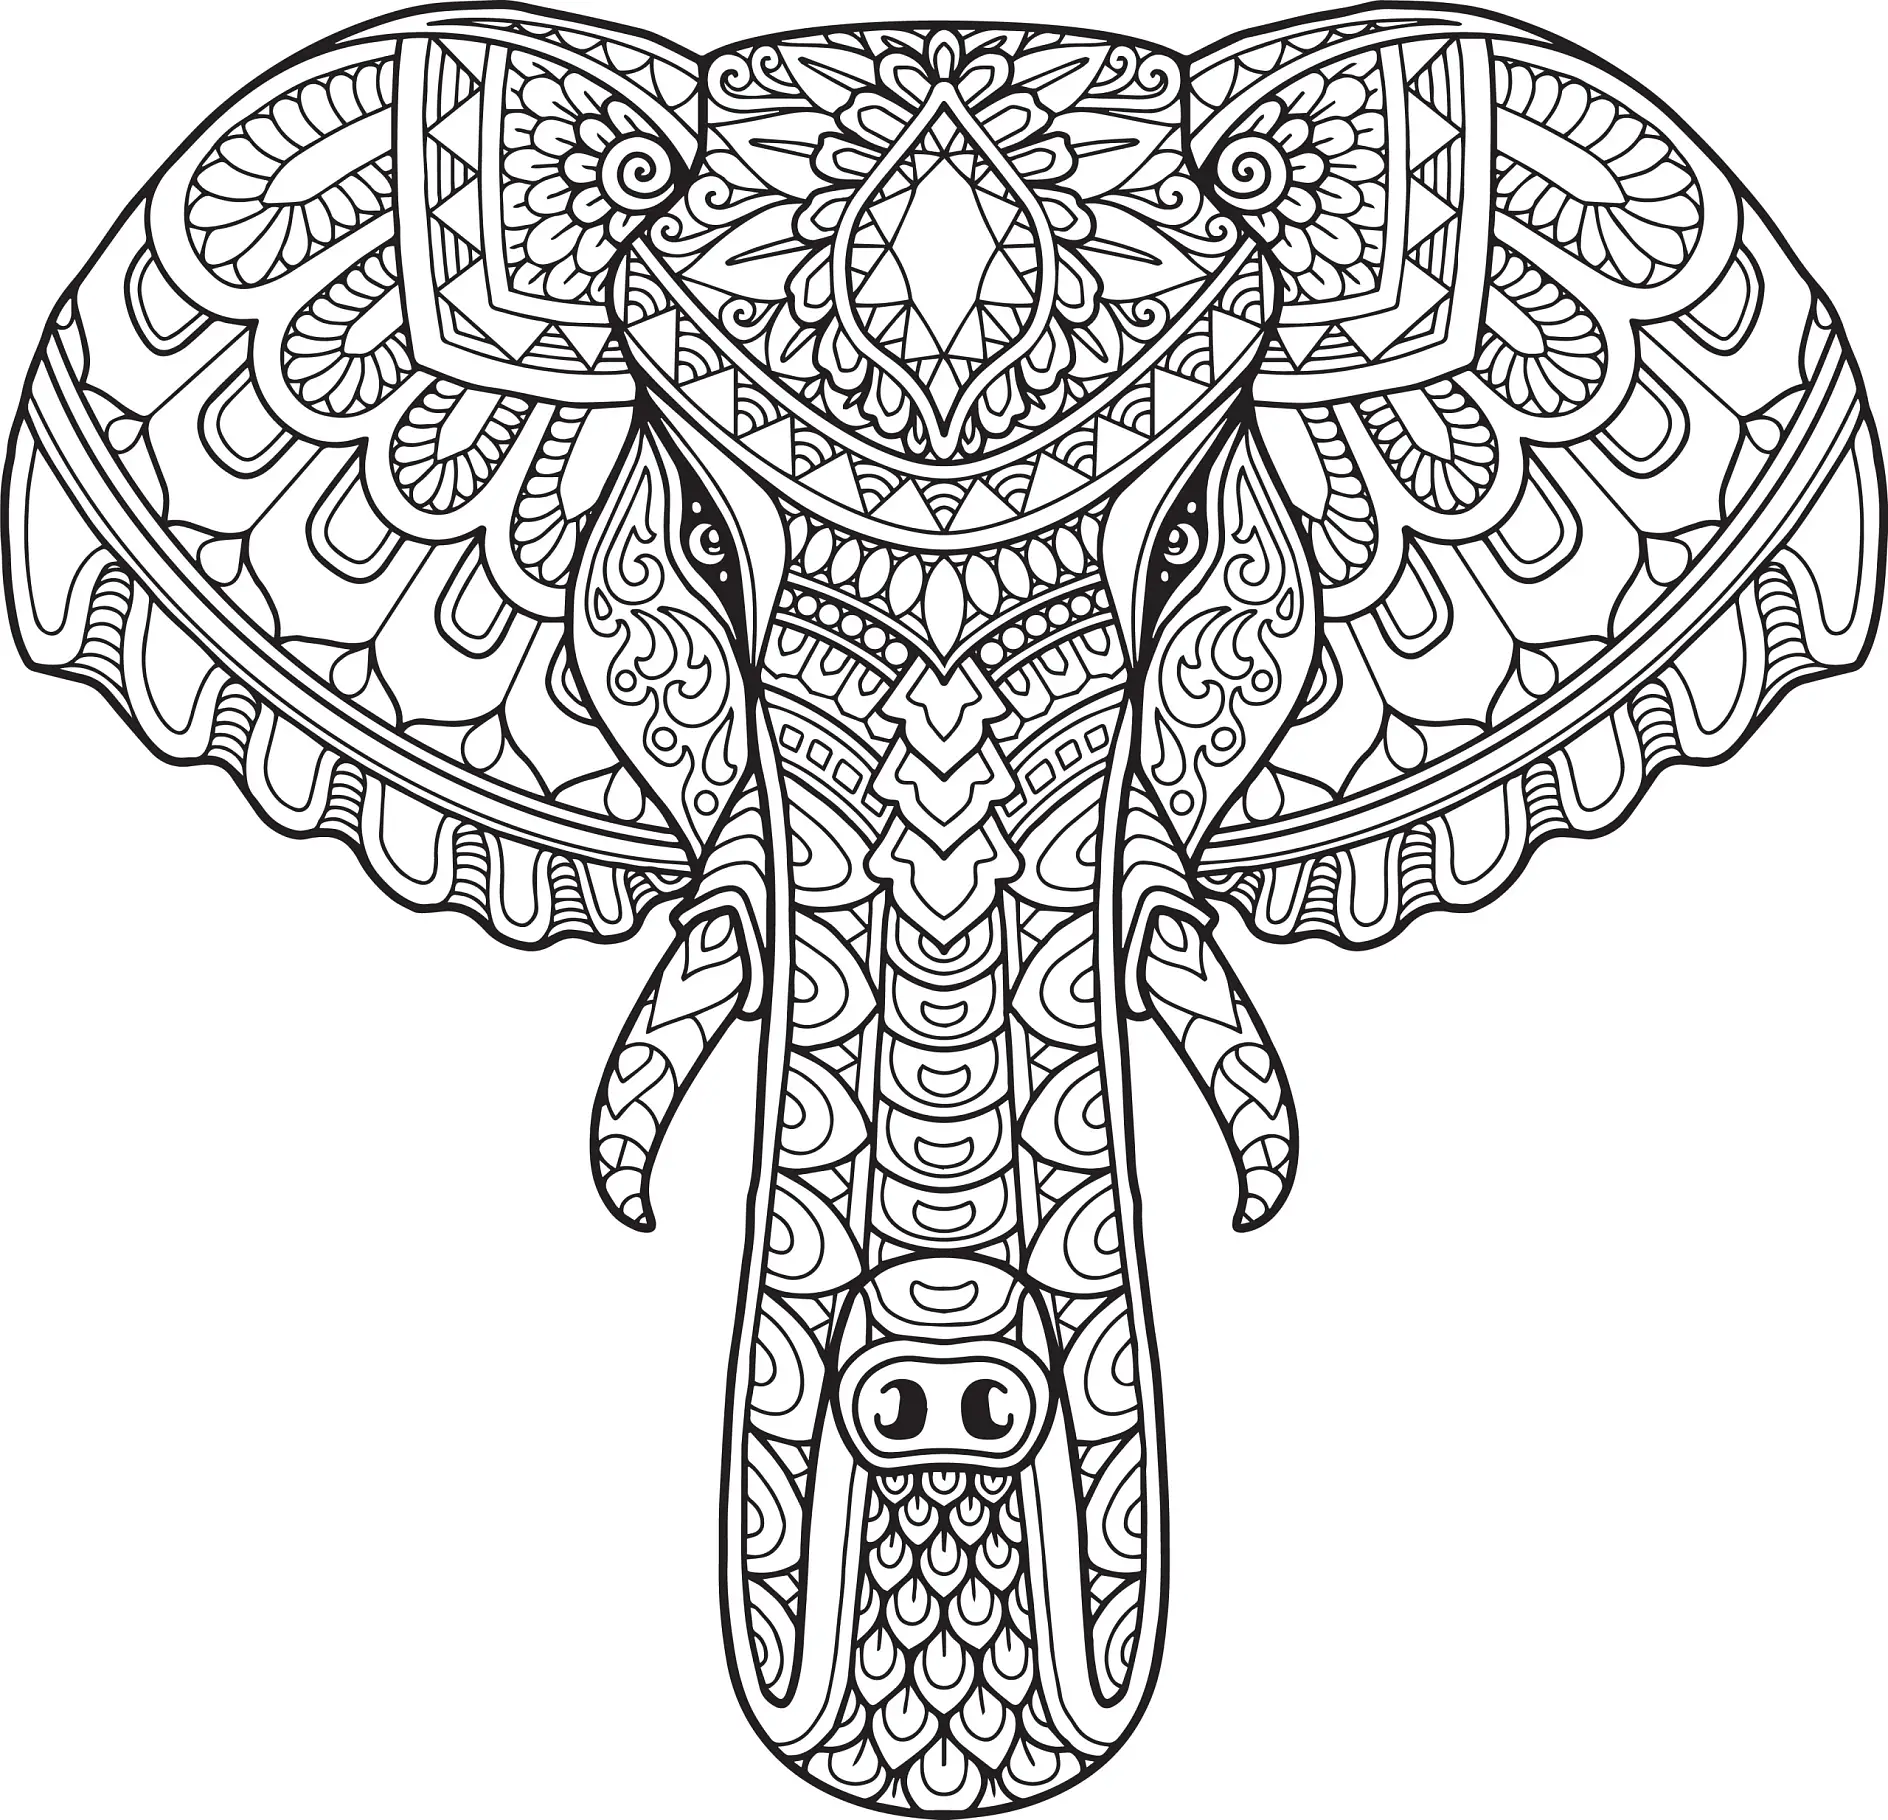 Ausmalbild Mandala Elefant mit dekorativen Mustern